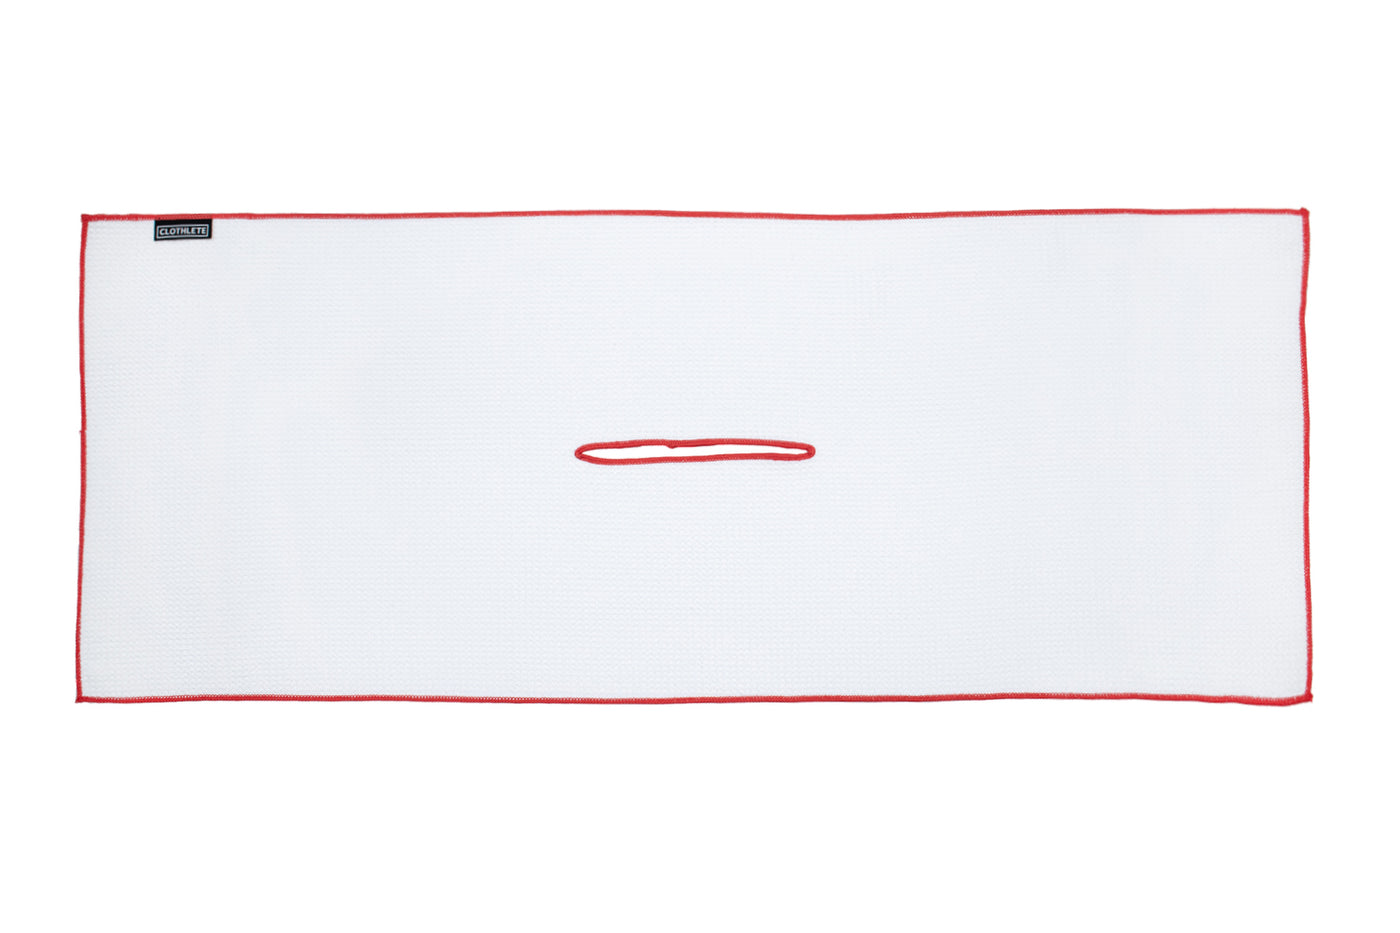 St. Louis Blues 16'' x 40'' Microfiber Golf Towel - Navy